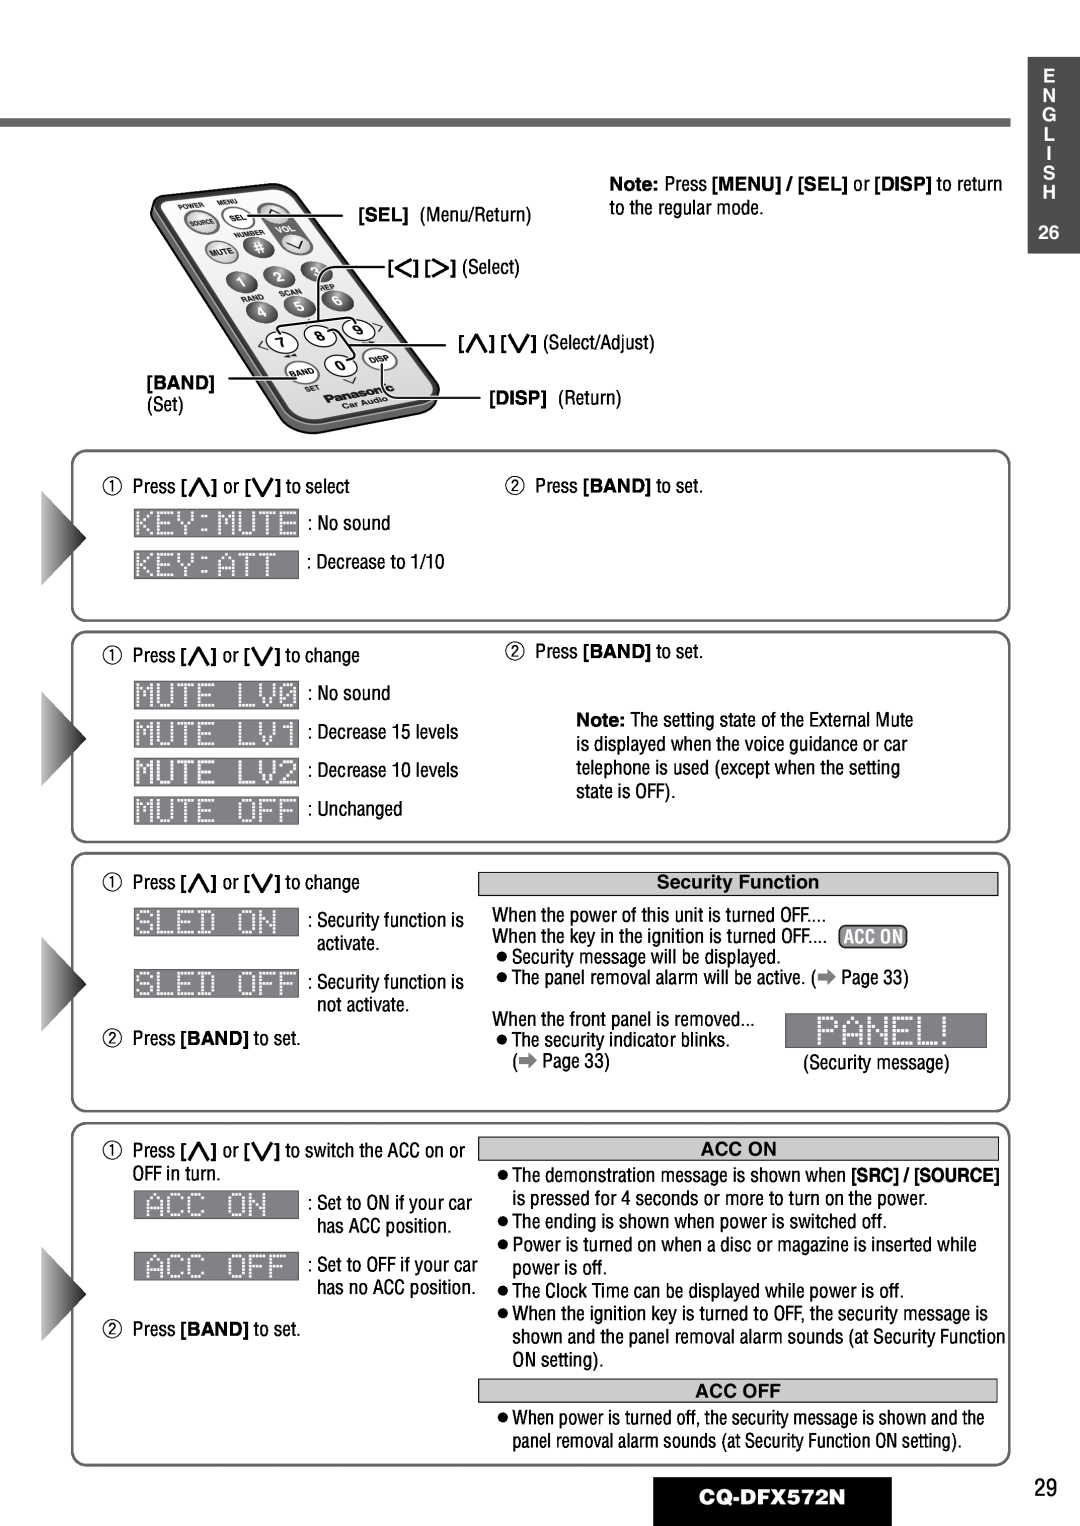 Panasonic operating instructions CQ-DFX572N29, E N G L I S H 